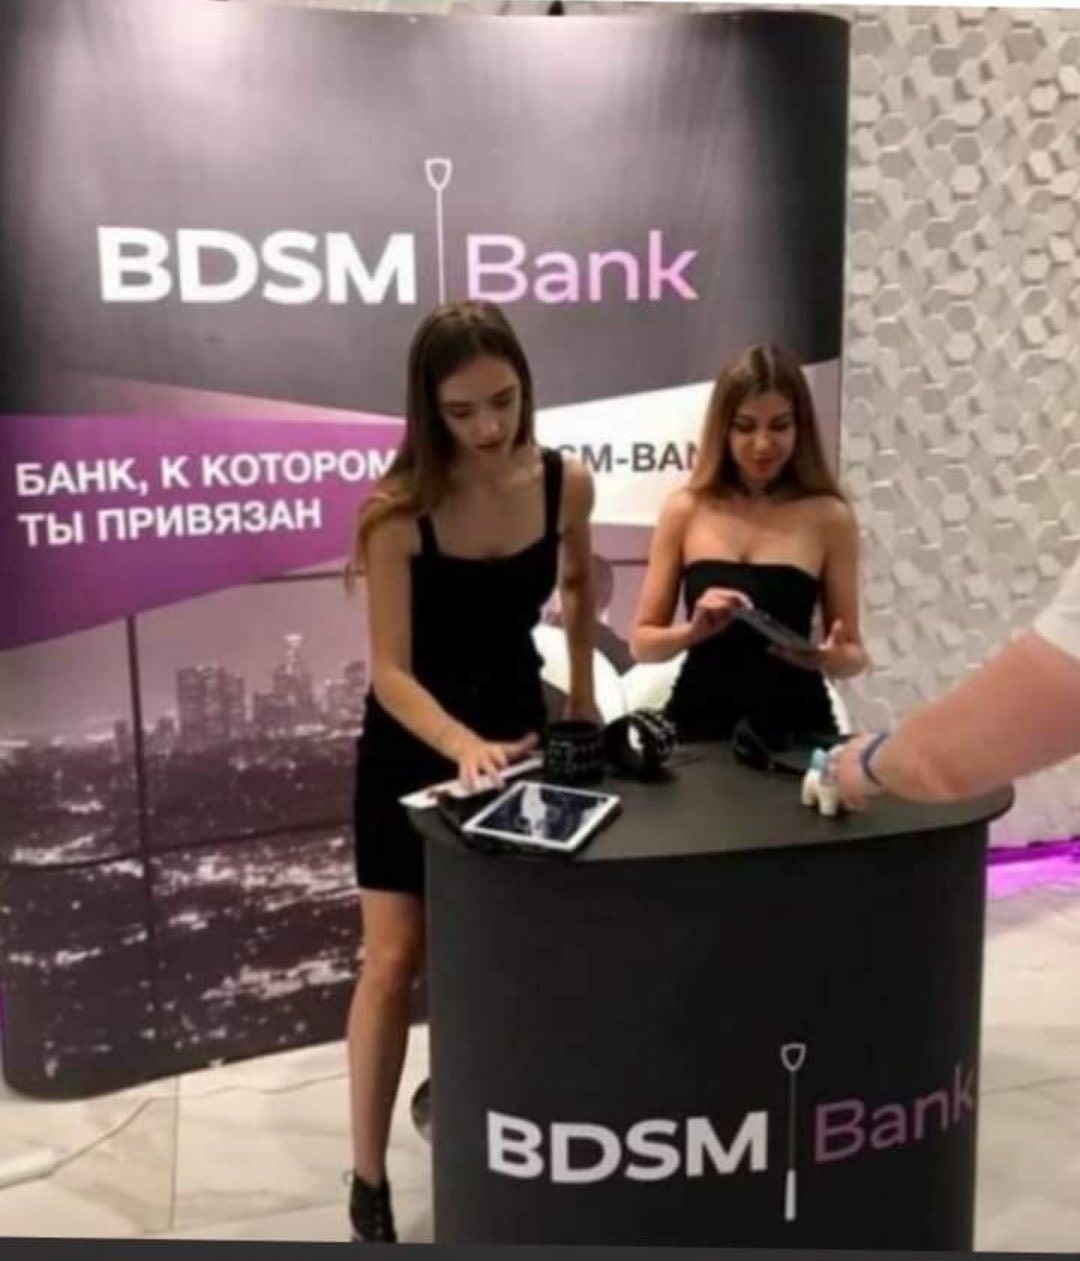 Bdsm bank